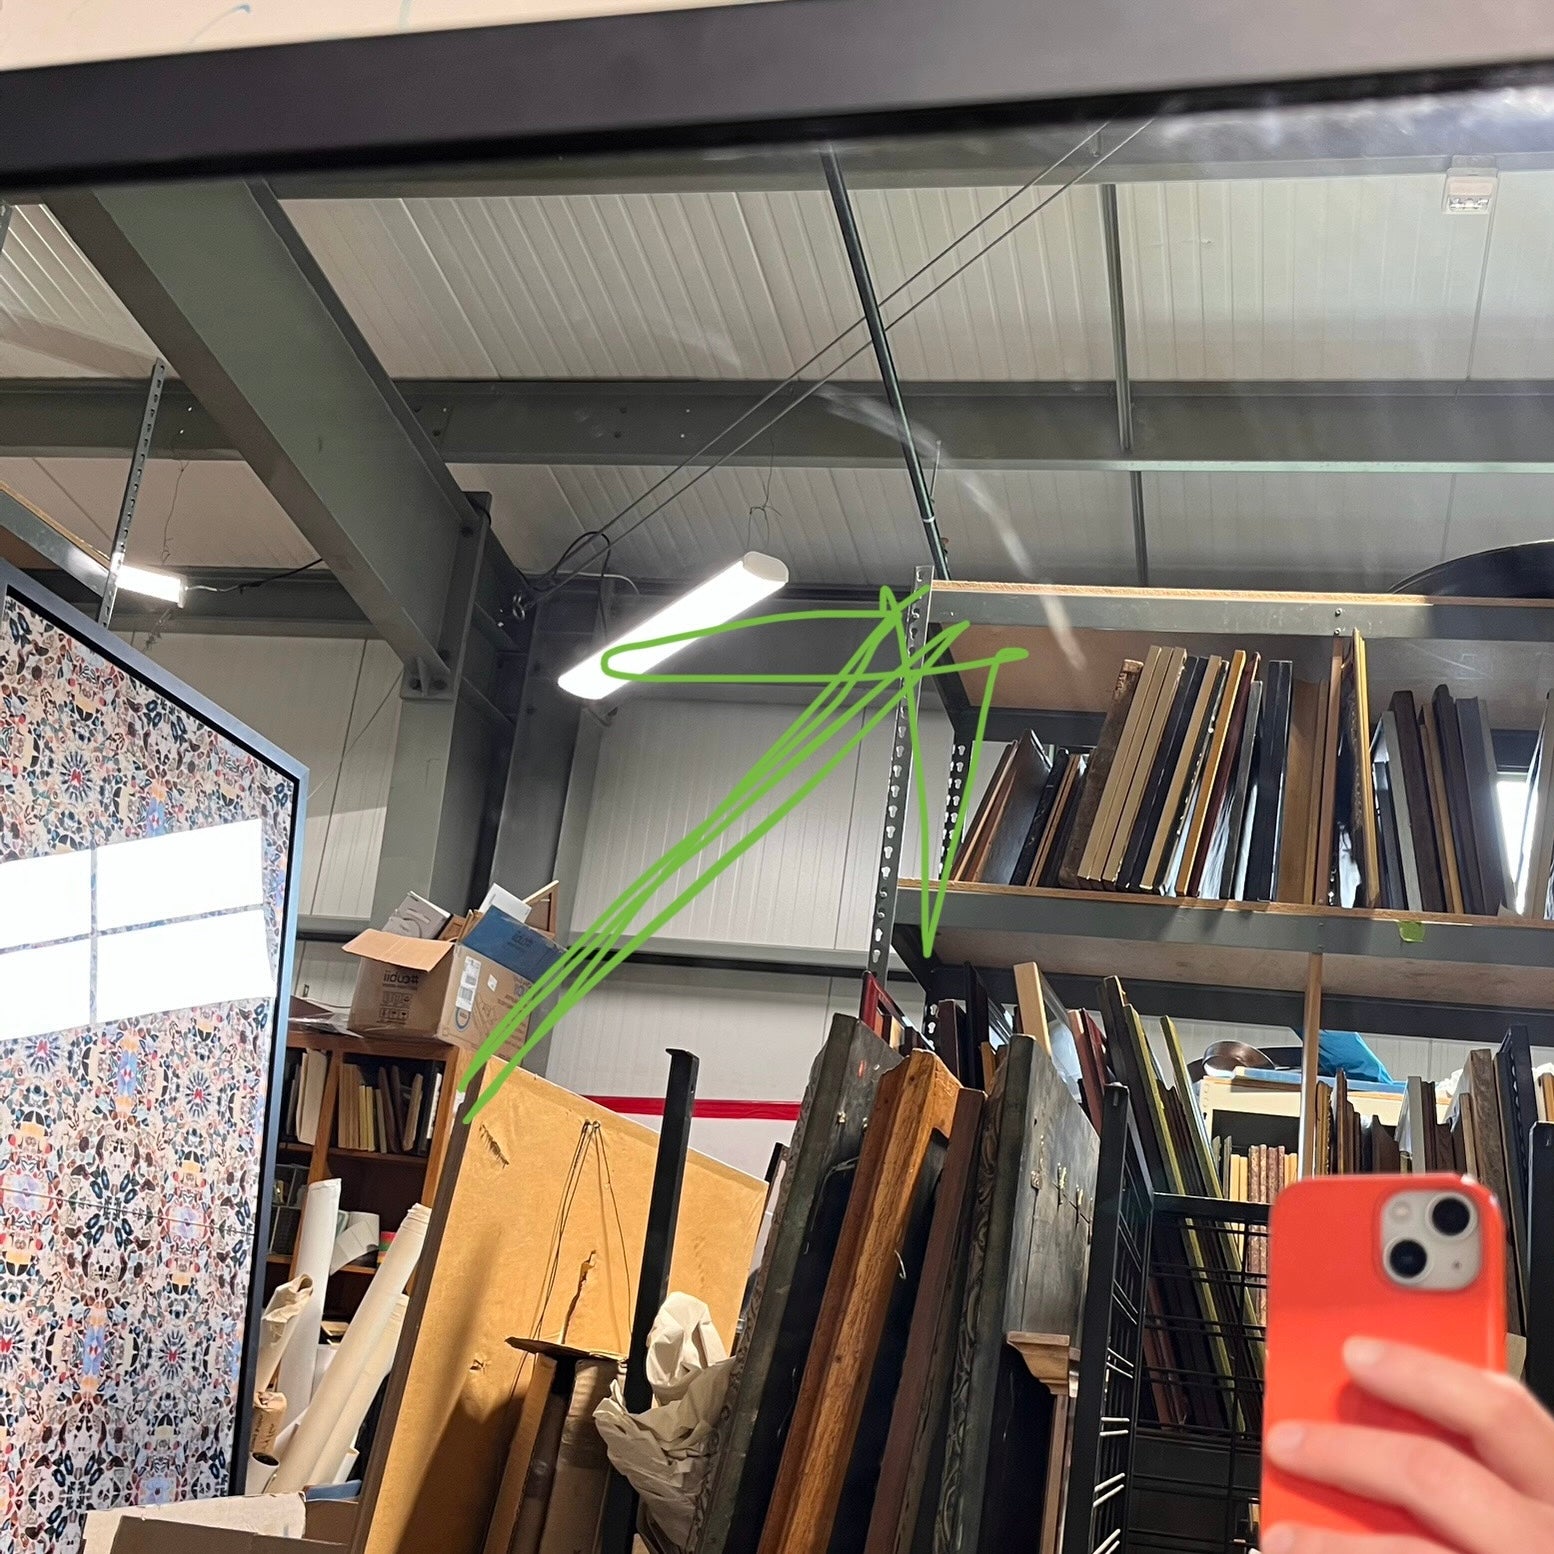 Lawson Black Iron Shelf Mirror; 35"x 47"